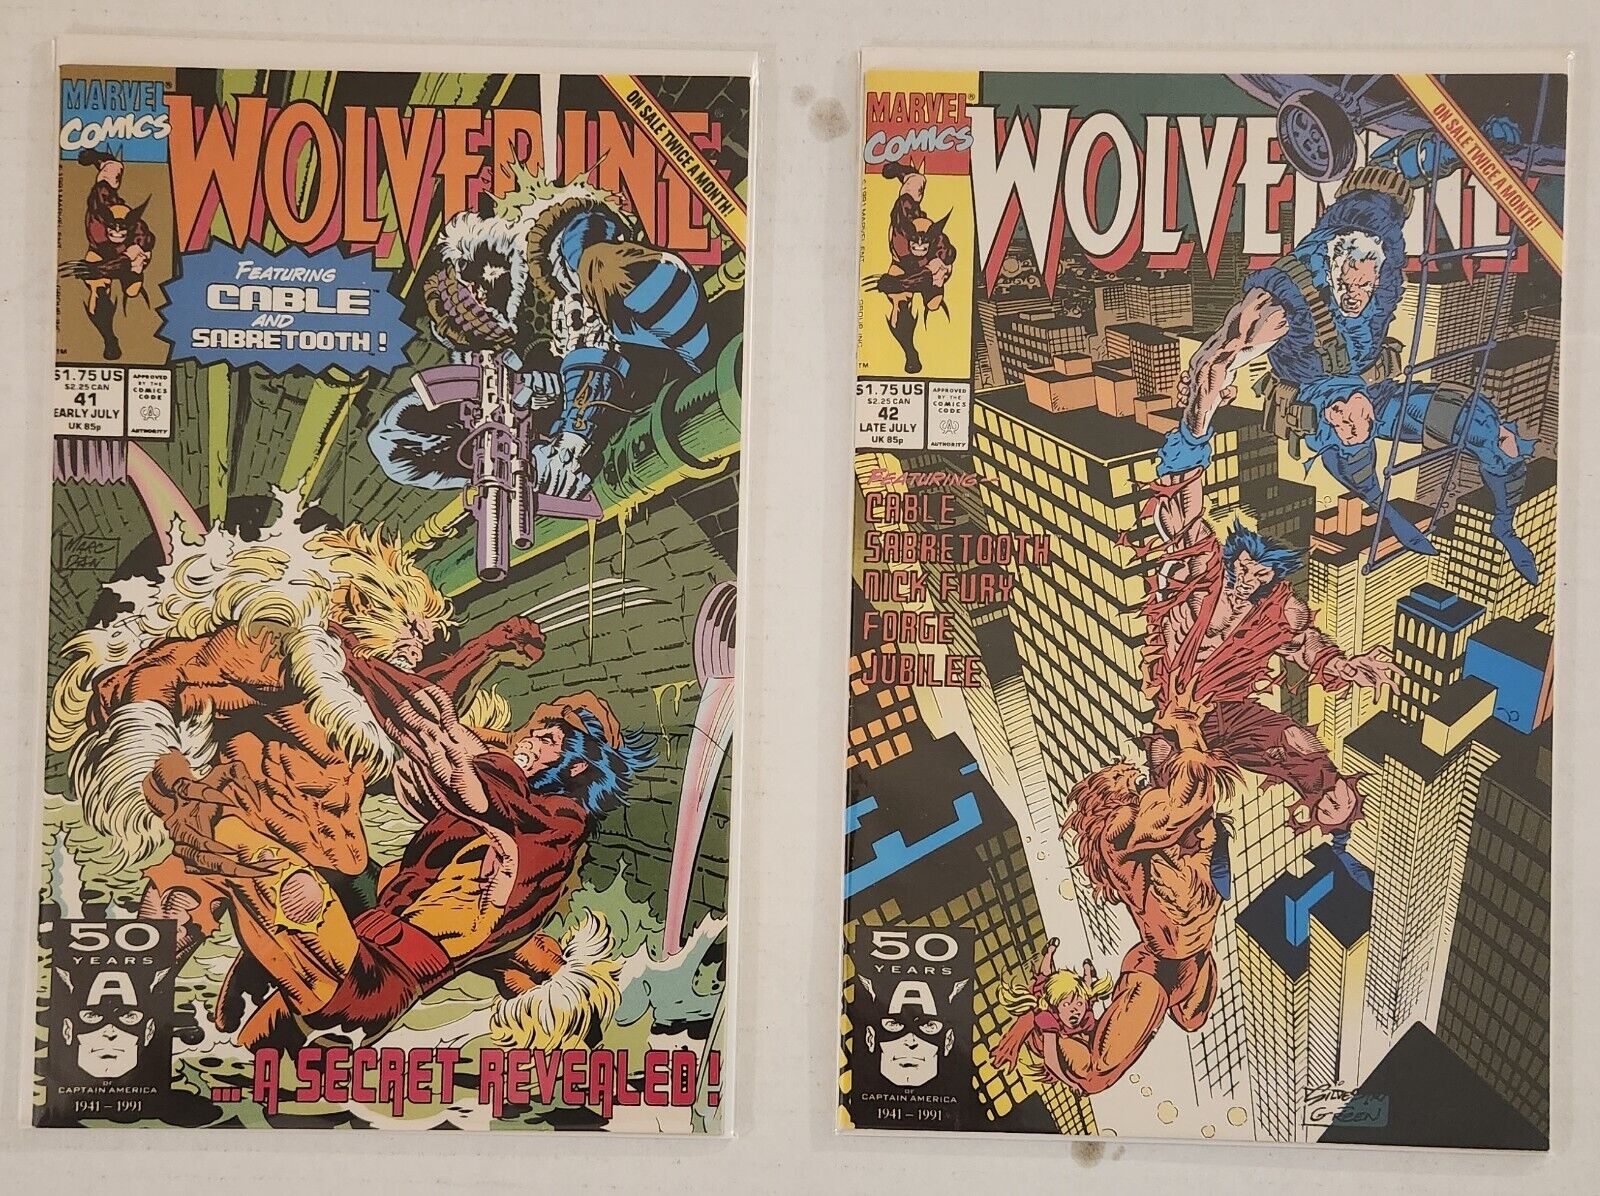 Wolverine (vol. 2) #41-50 (Marvel Comics 1991-1992) 10 issue run